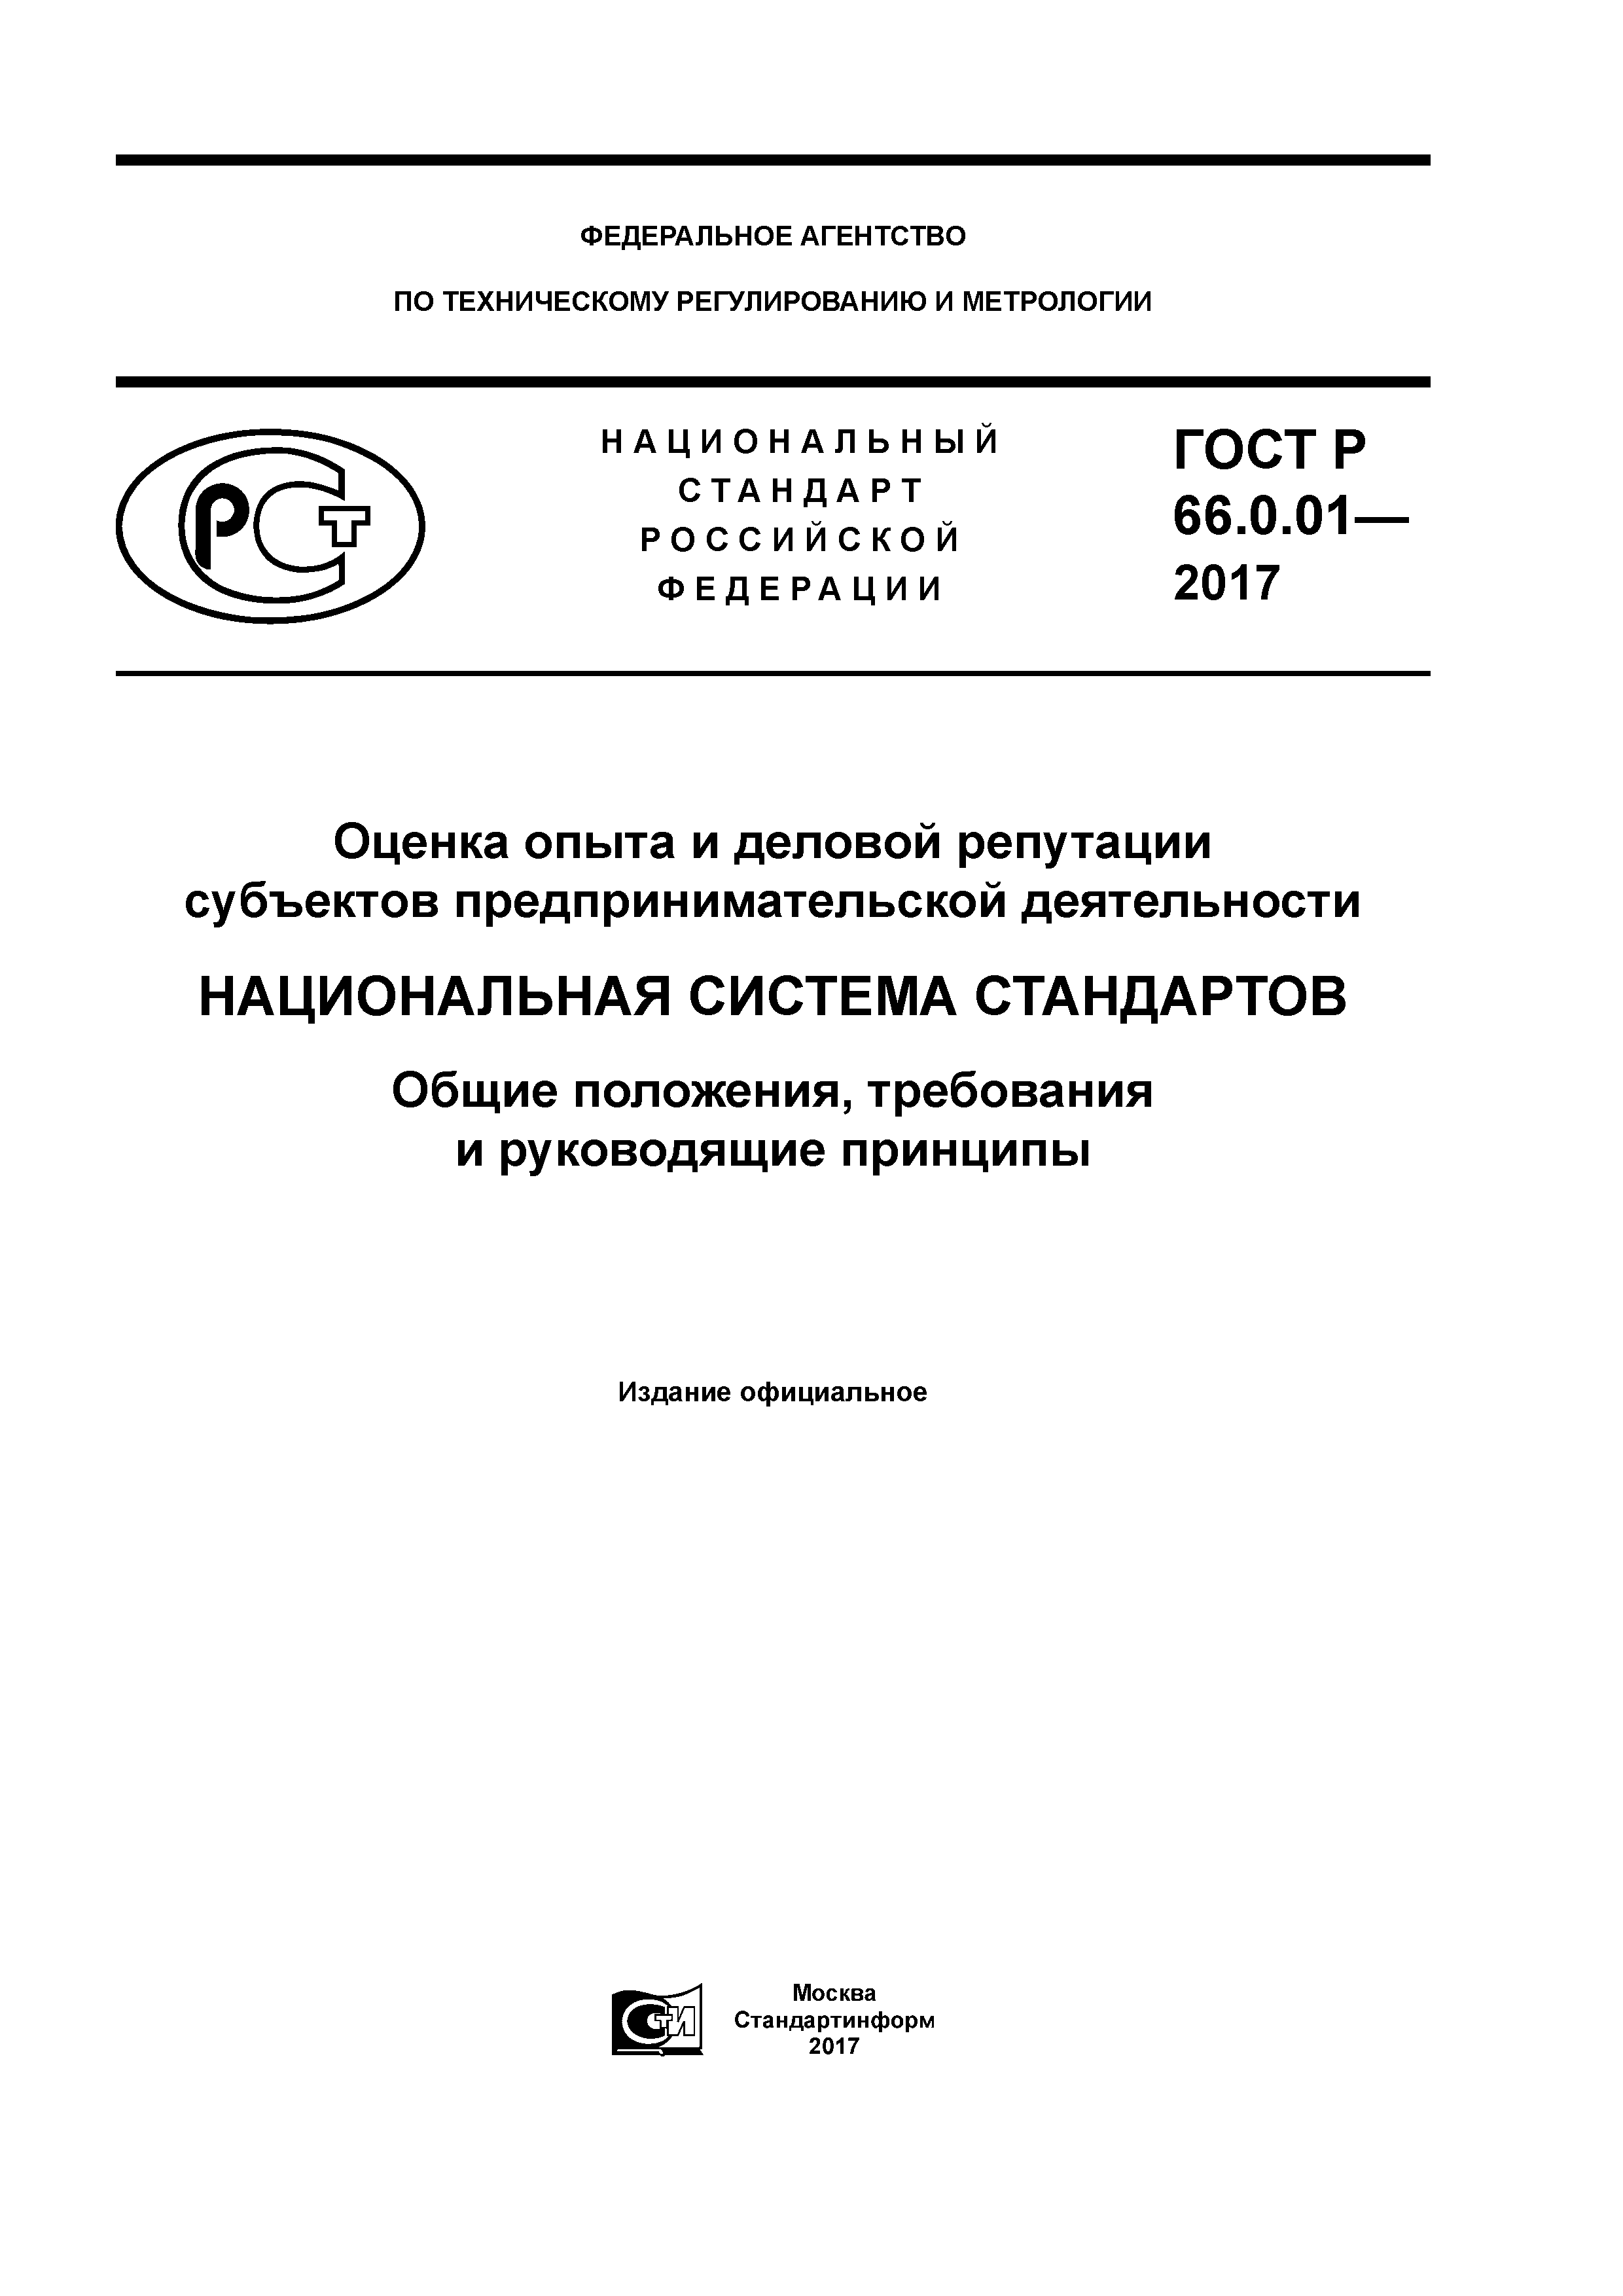 ГОСТ Р 66.0.01-2017